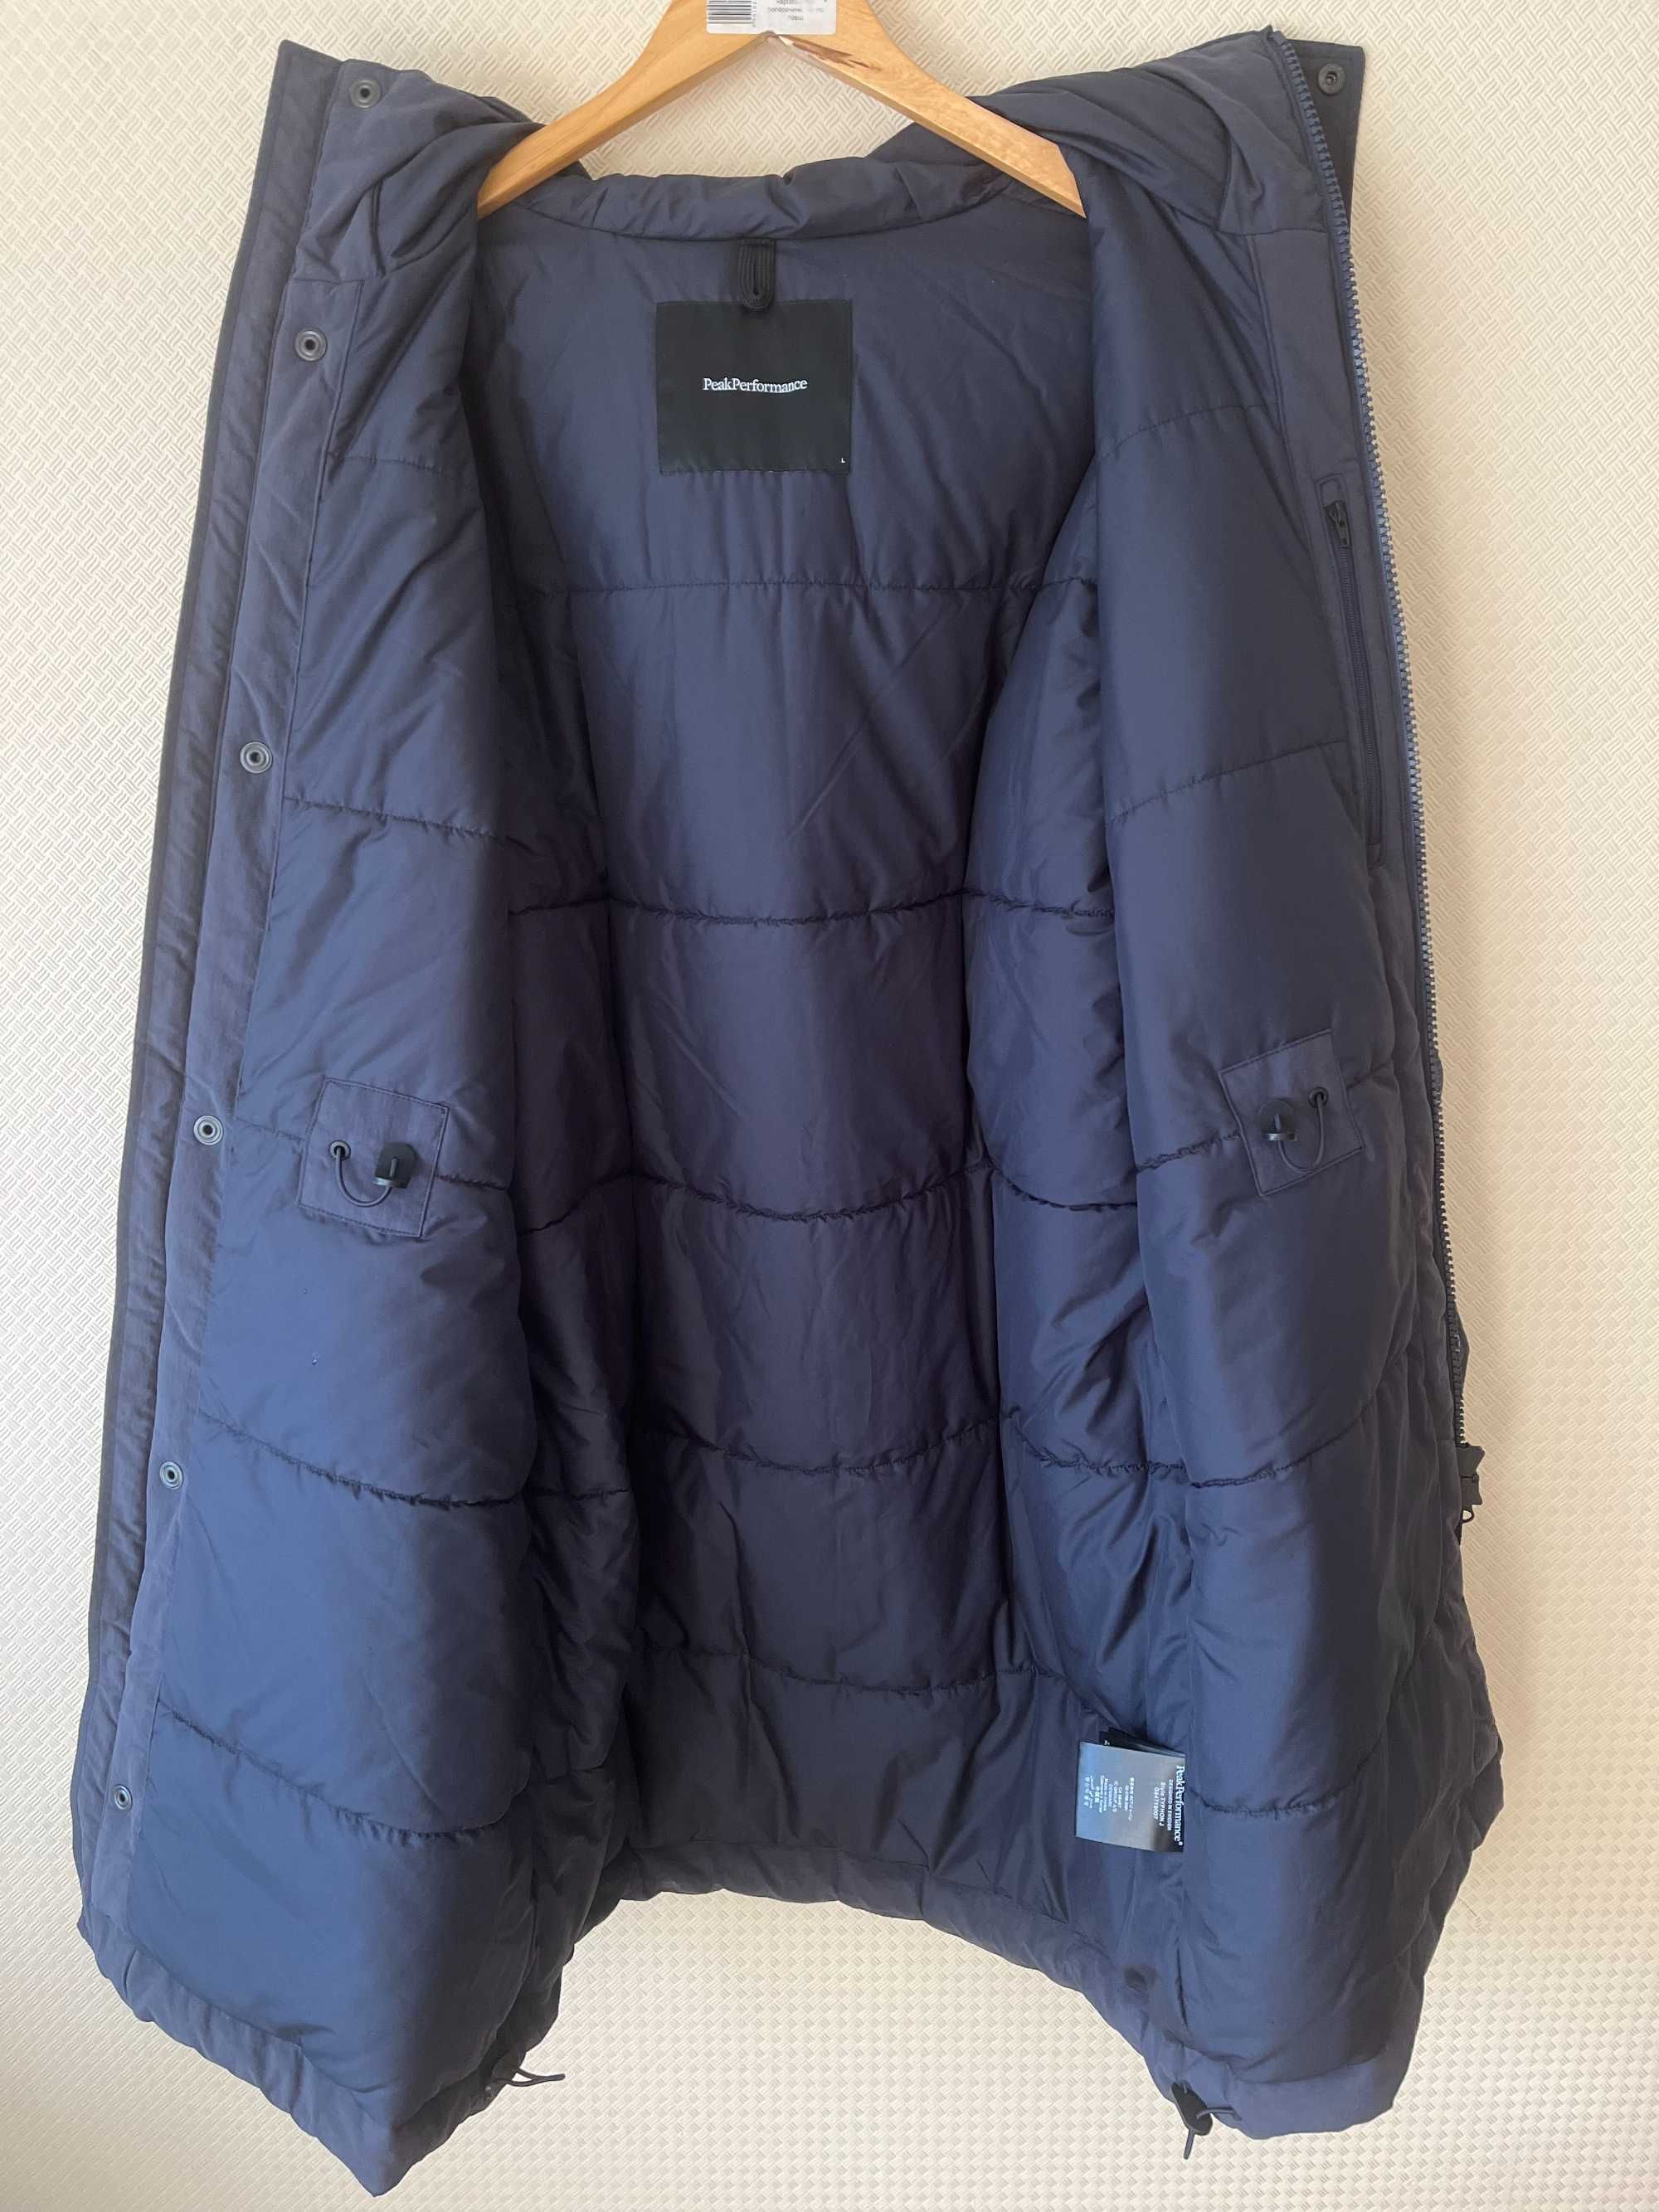 Peak Performance Typhon Jacket Куртка парка мужская, L/52